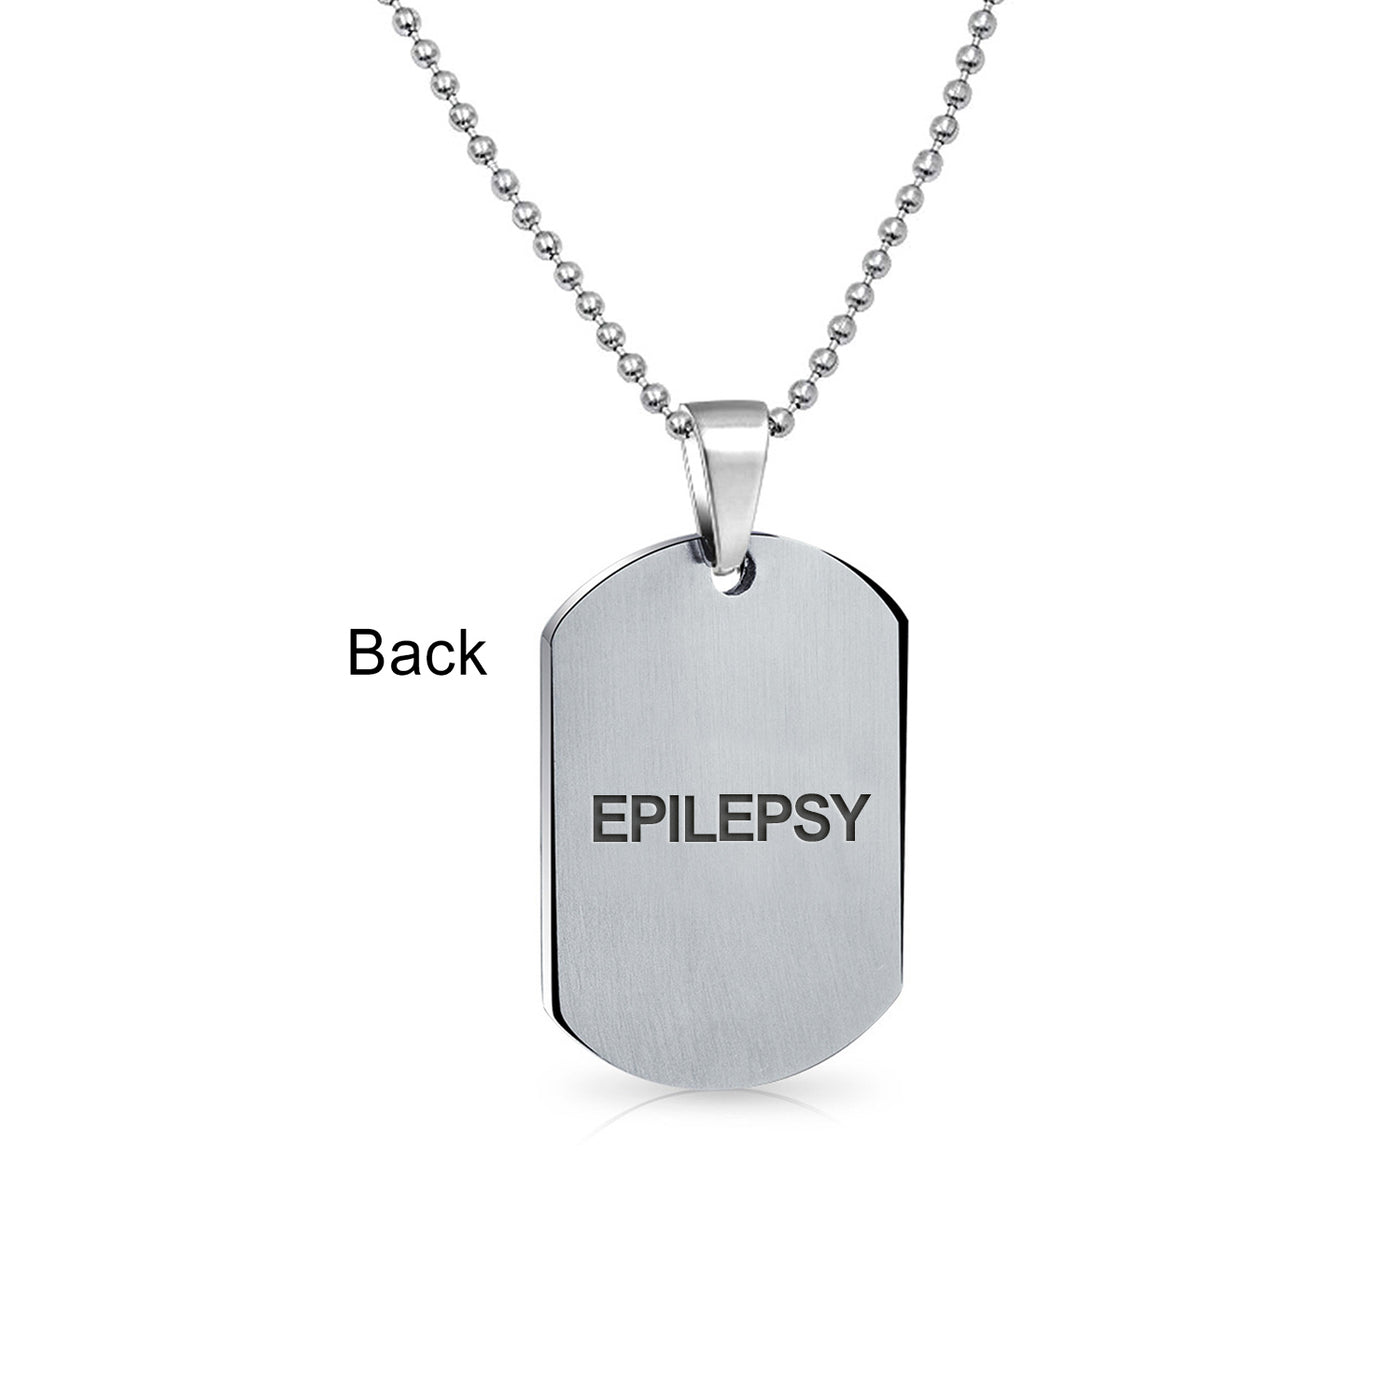 Epilepsy Small